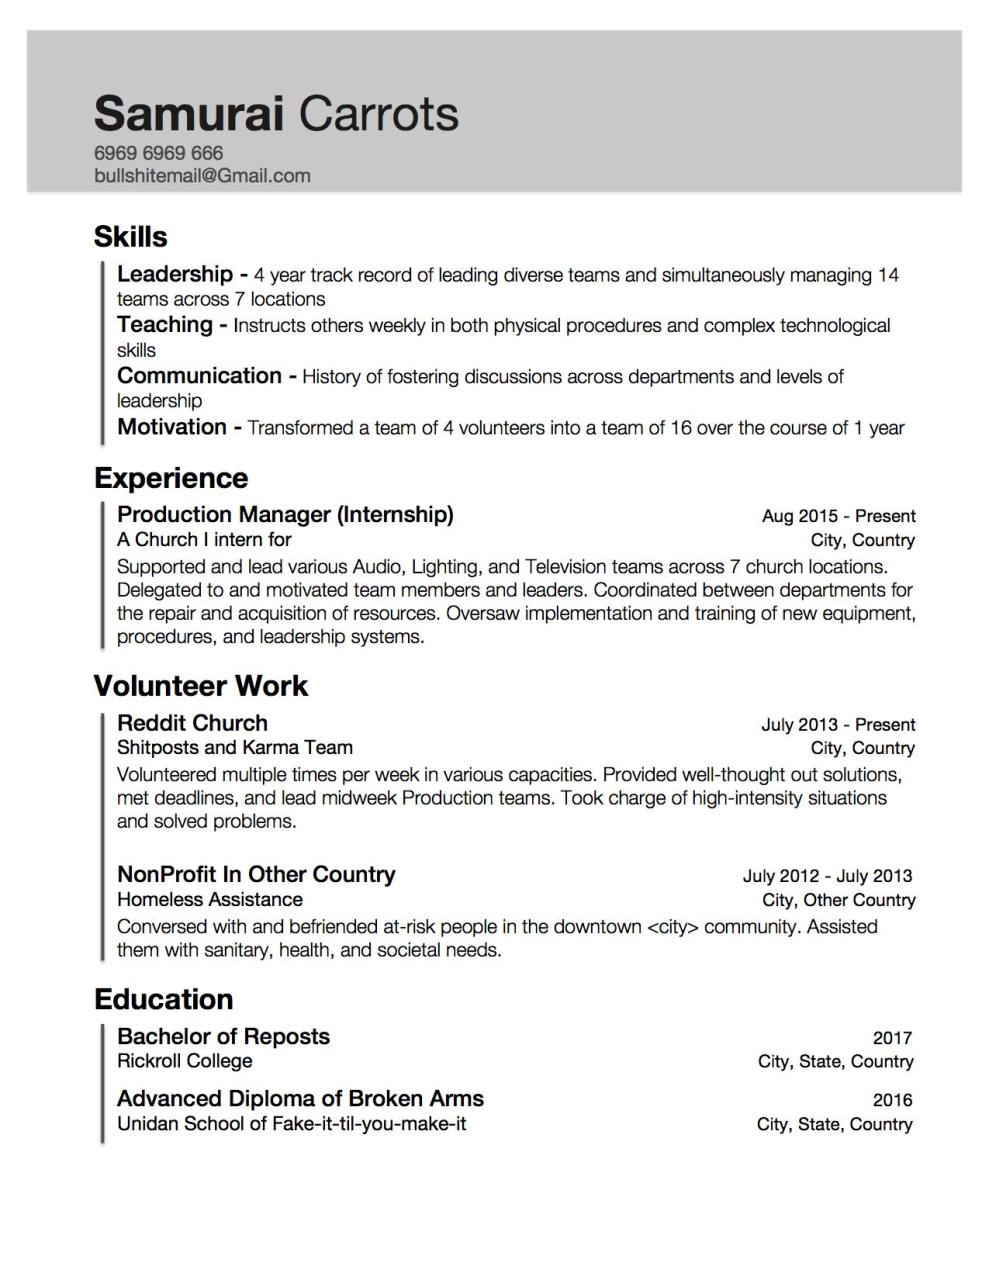 resume work experience description generator